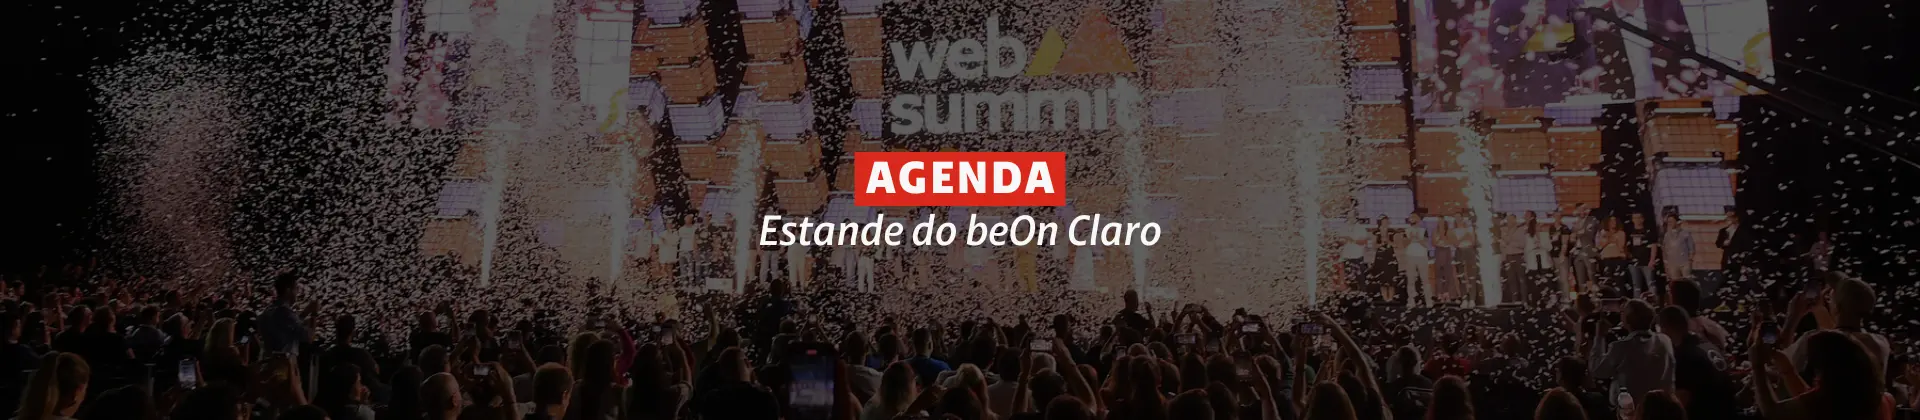 Agenda do stand do beOn Claro no Web Summit Rio 